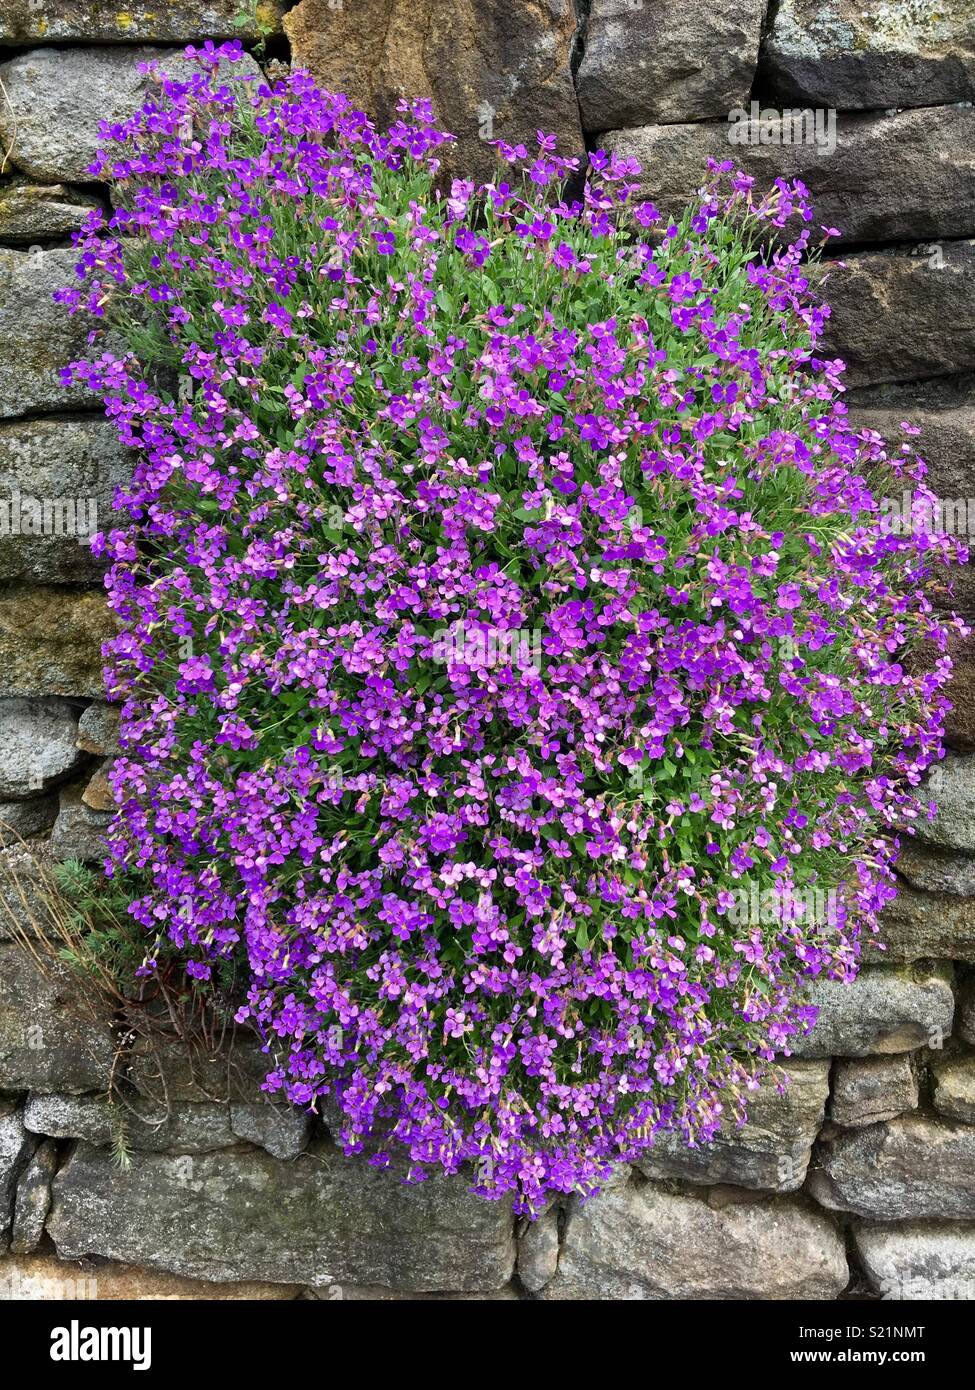 Purple Aubretia Flower in stone wall Stock Photo